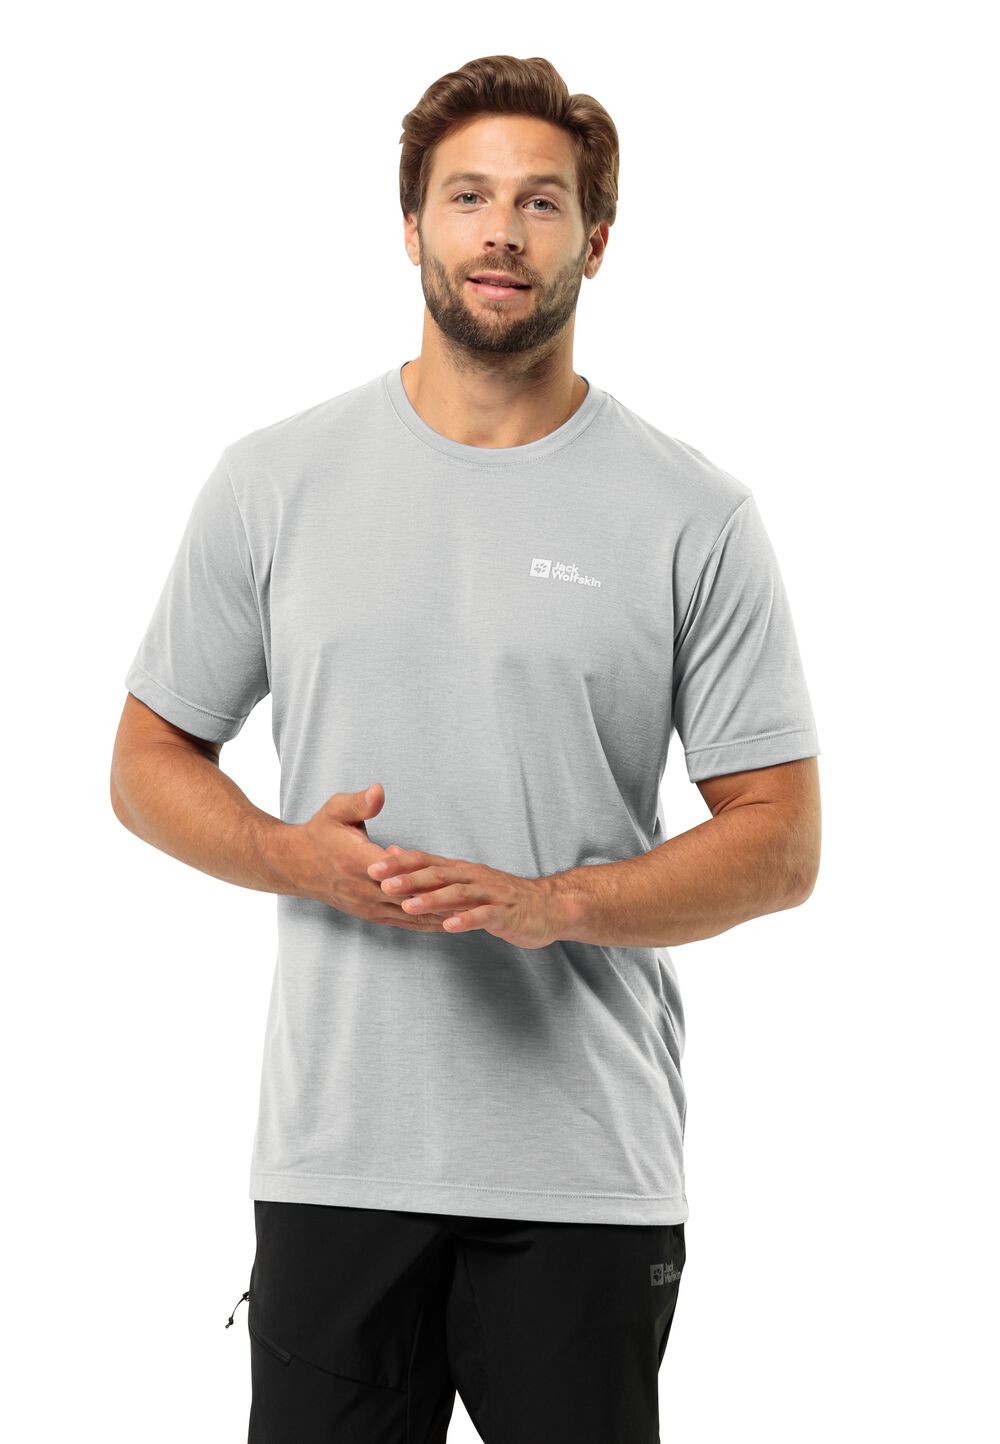 Jack Wolfskin Vonnan S S T-Shirt Men Functioneel shirt Heren XL grijs cool grey